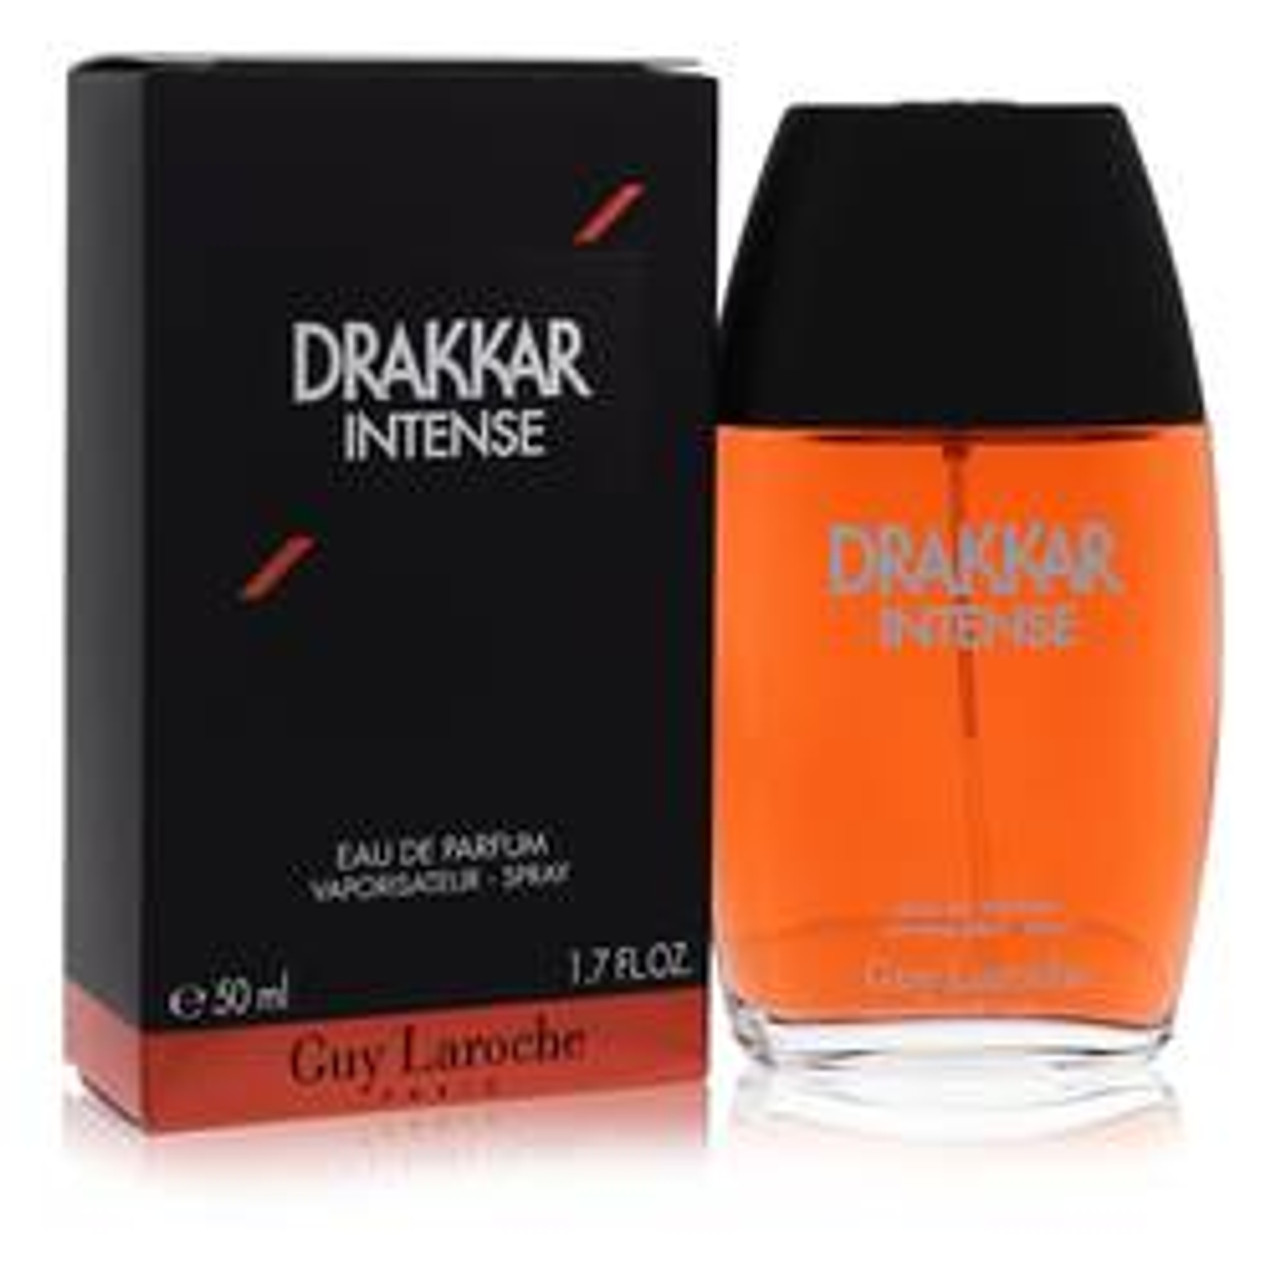 Drakkar Intense Cologne By Guy Laroche Eau De Parfum Spray 1.7 oz for Men - [From 50.33 - Choose pk Qty ] - *Ships from Miami